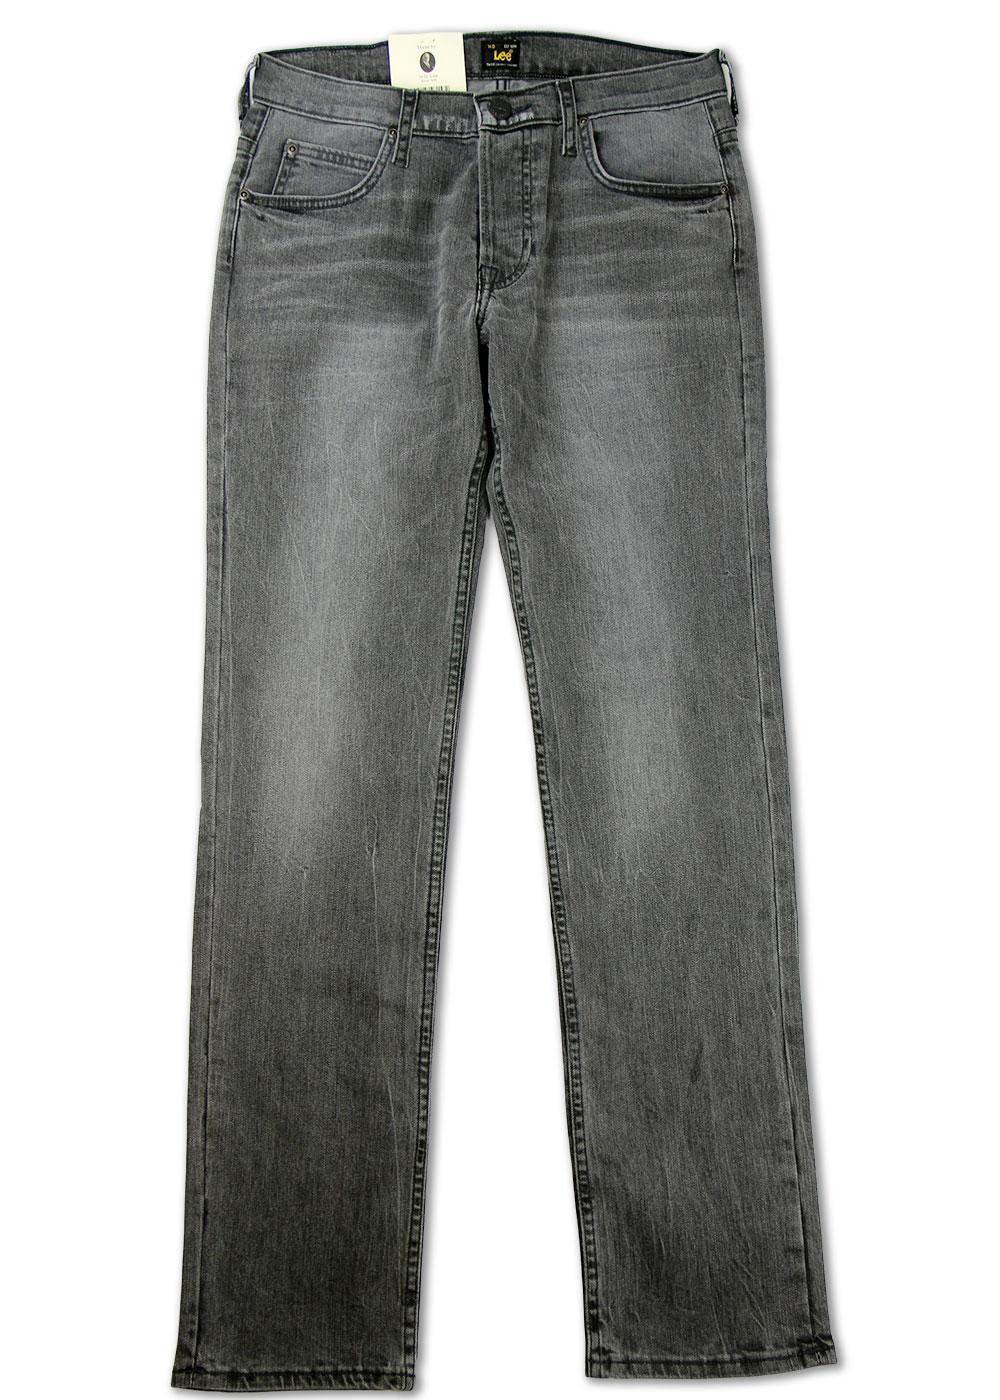 LEE JEANS Powell Retro Mod Low Slim Fit Jeans Worn Grey